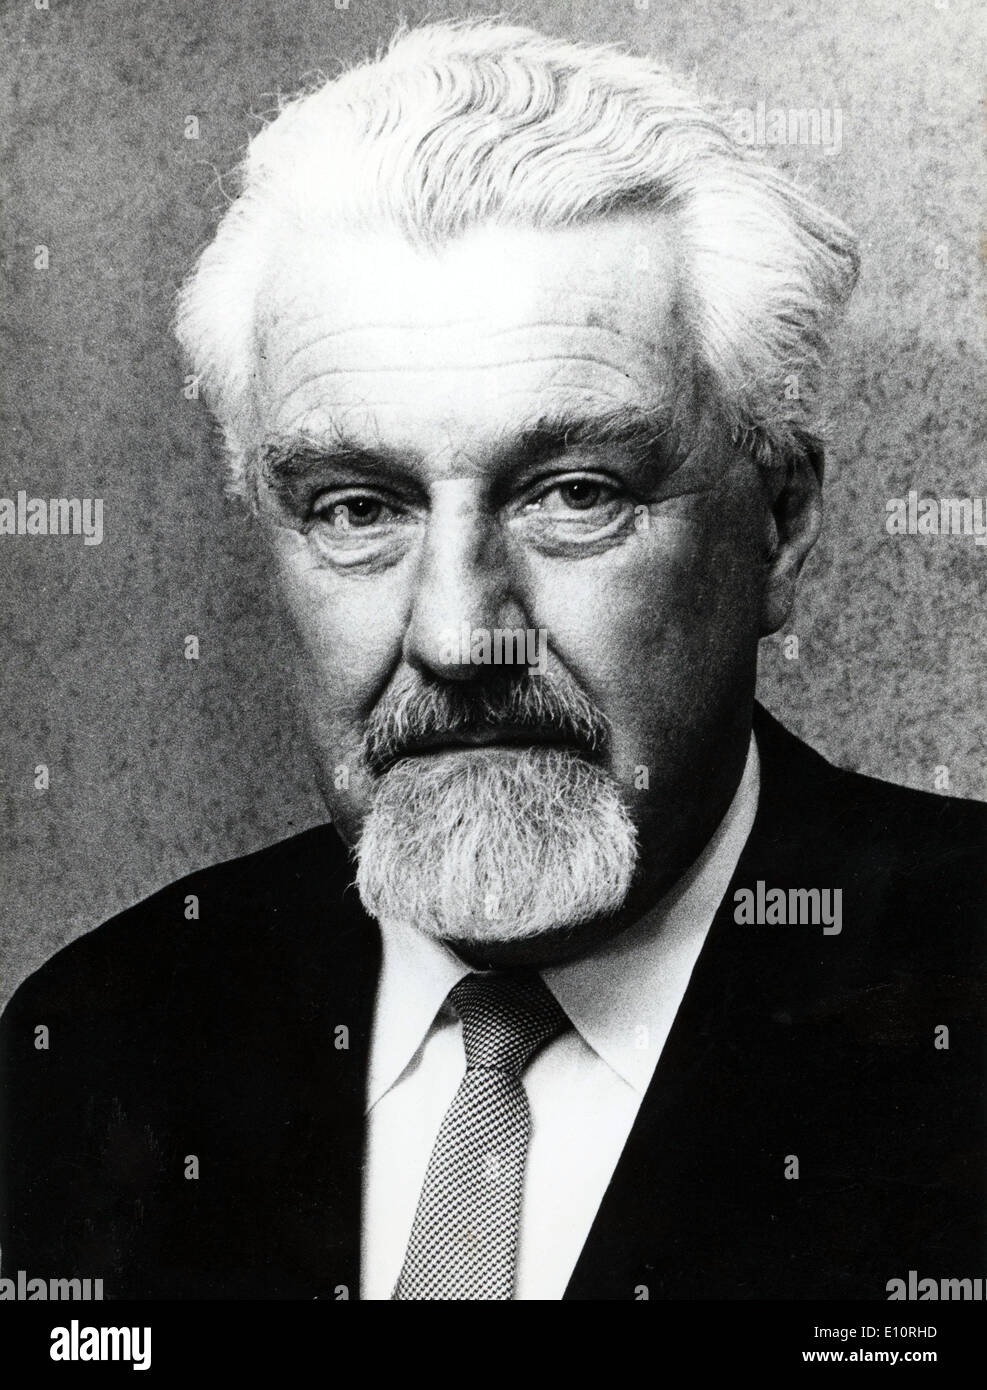 Oct. 16, 1973 - Zurich, Switzerland - Official portrait of behaviorist KONRAD LORENZ after winning the 1973 Nobel Prize in Medicine. Stock Photo